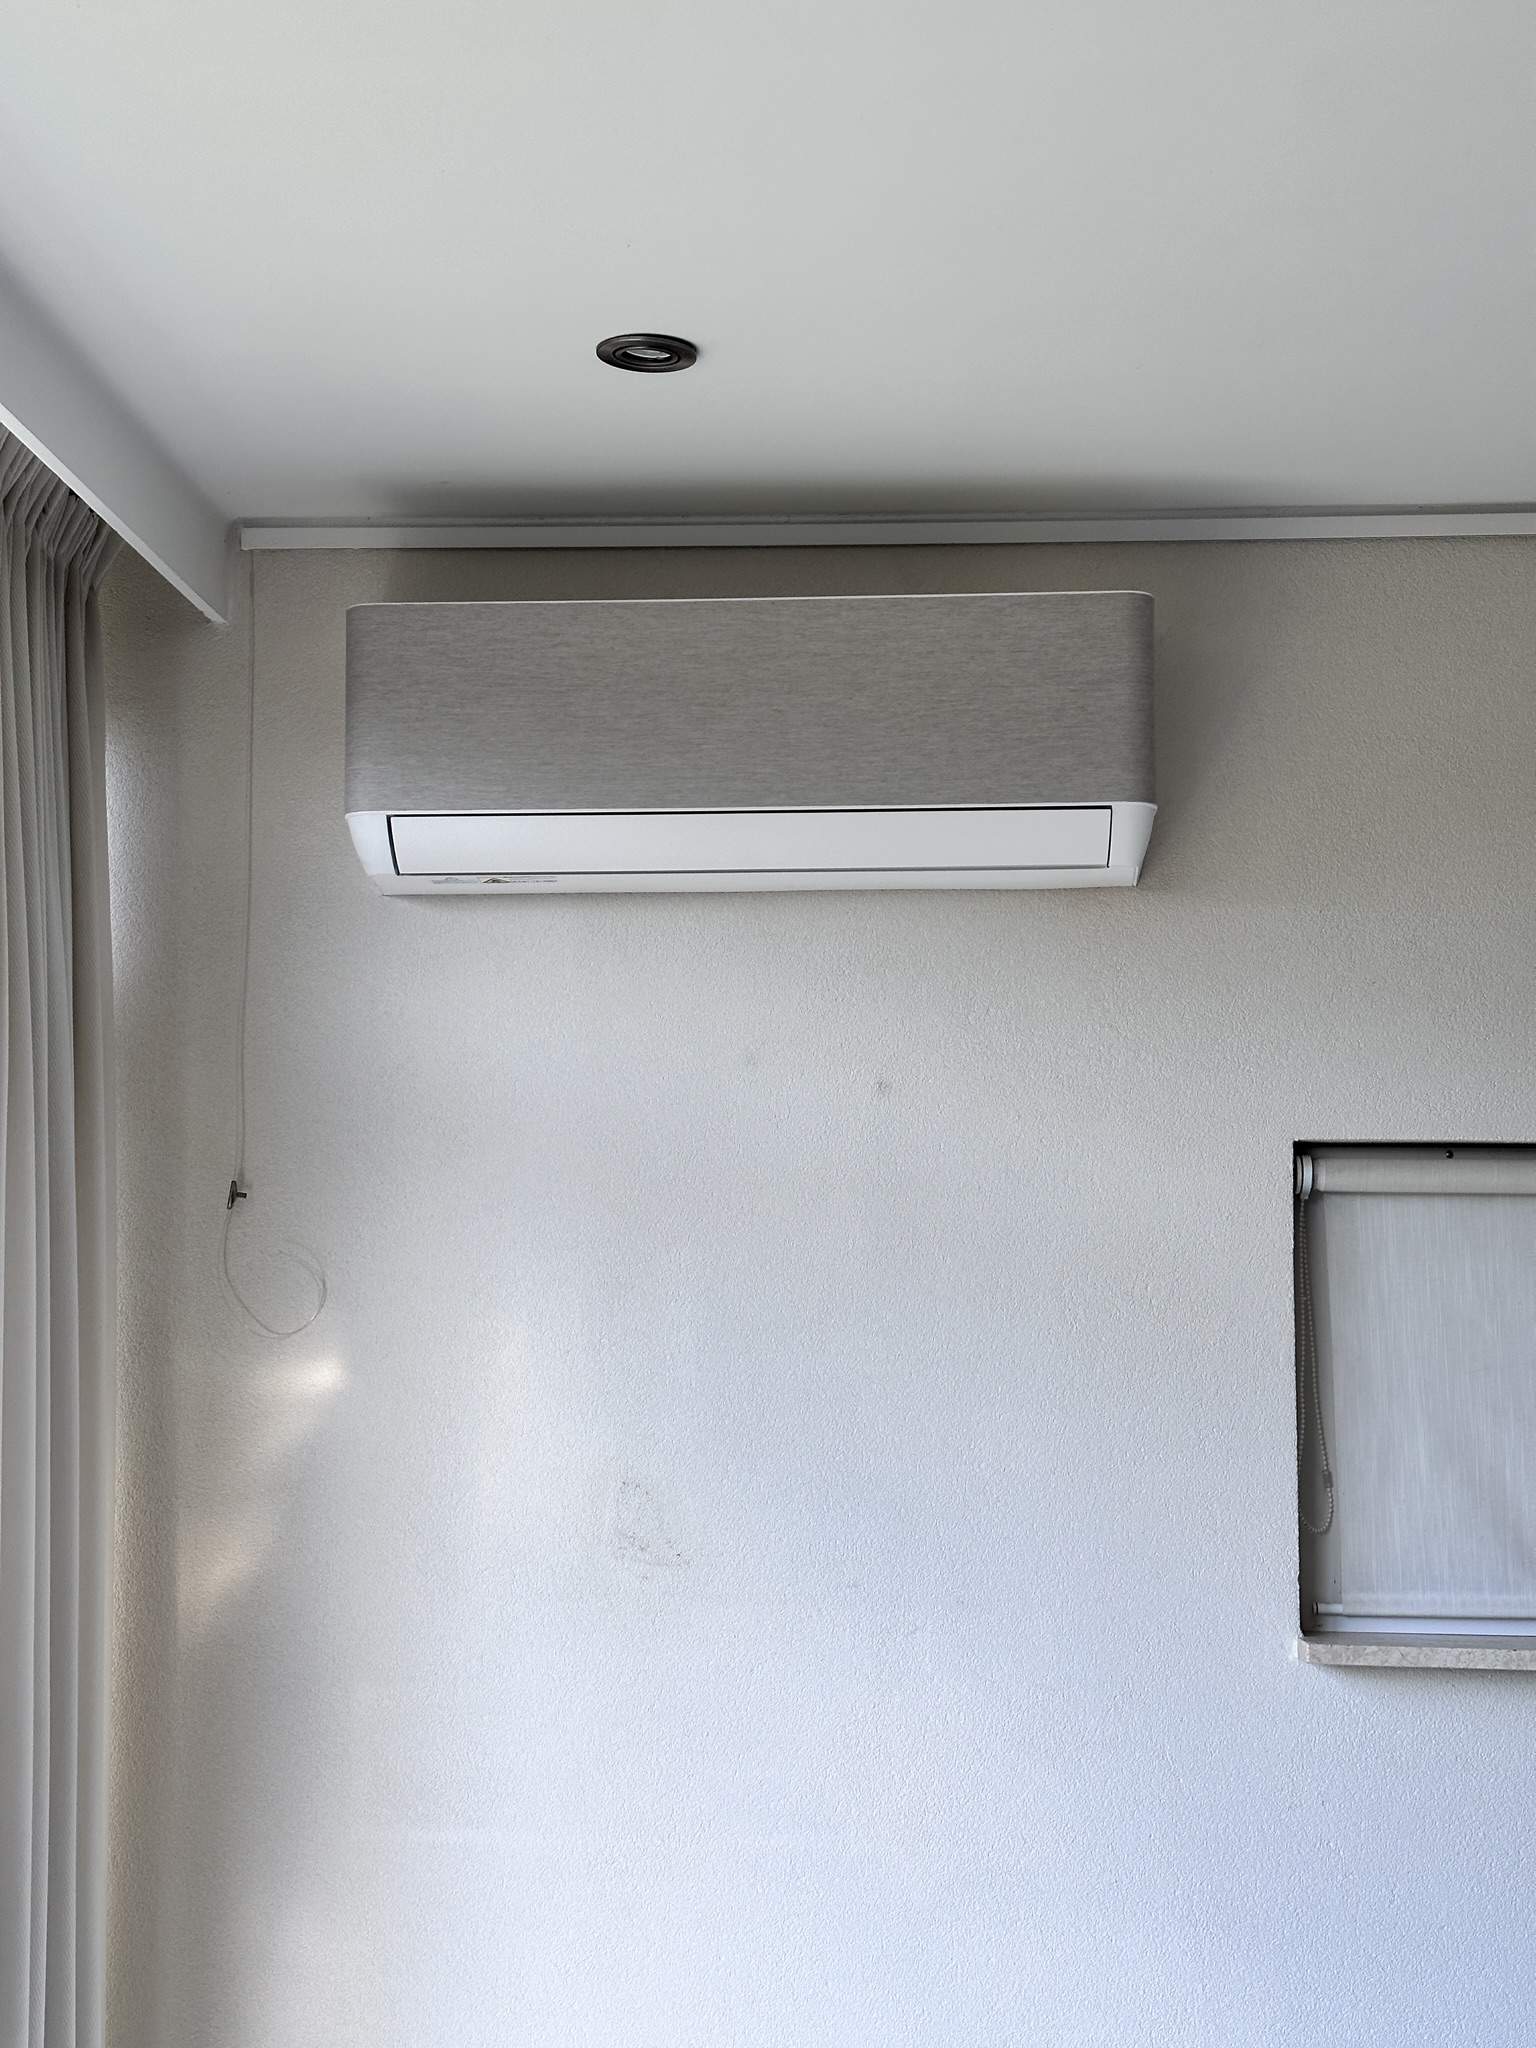 Moderne airconditioning in kantoorruimte